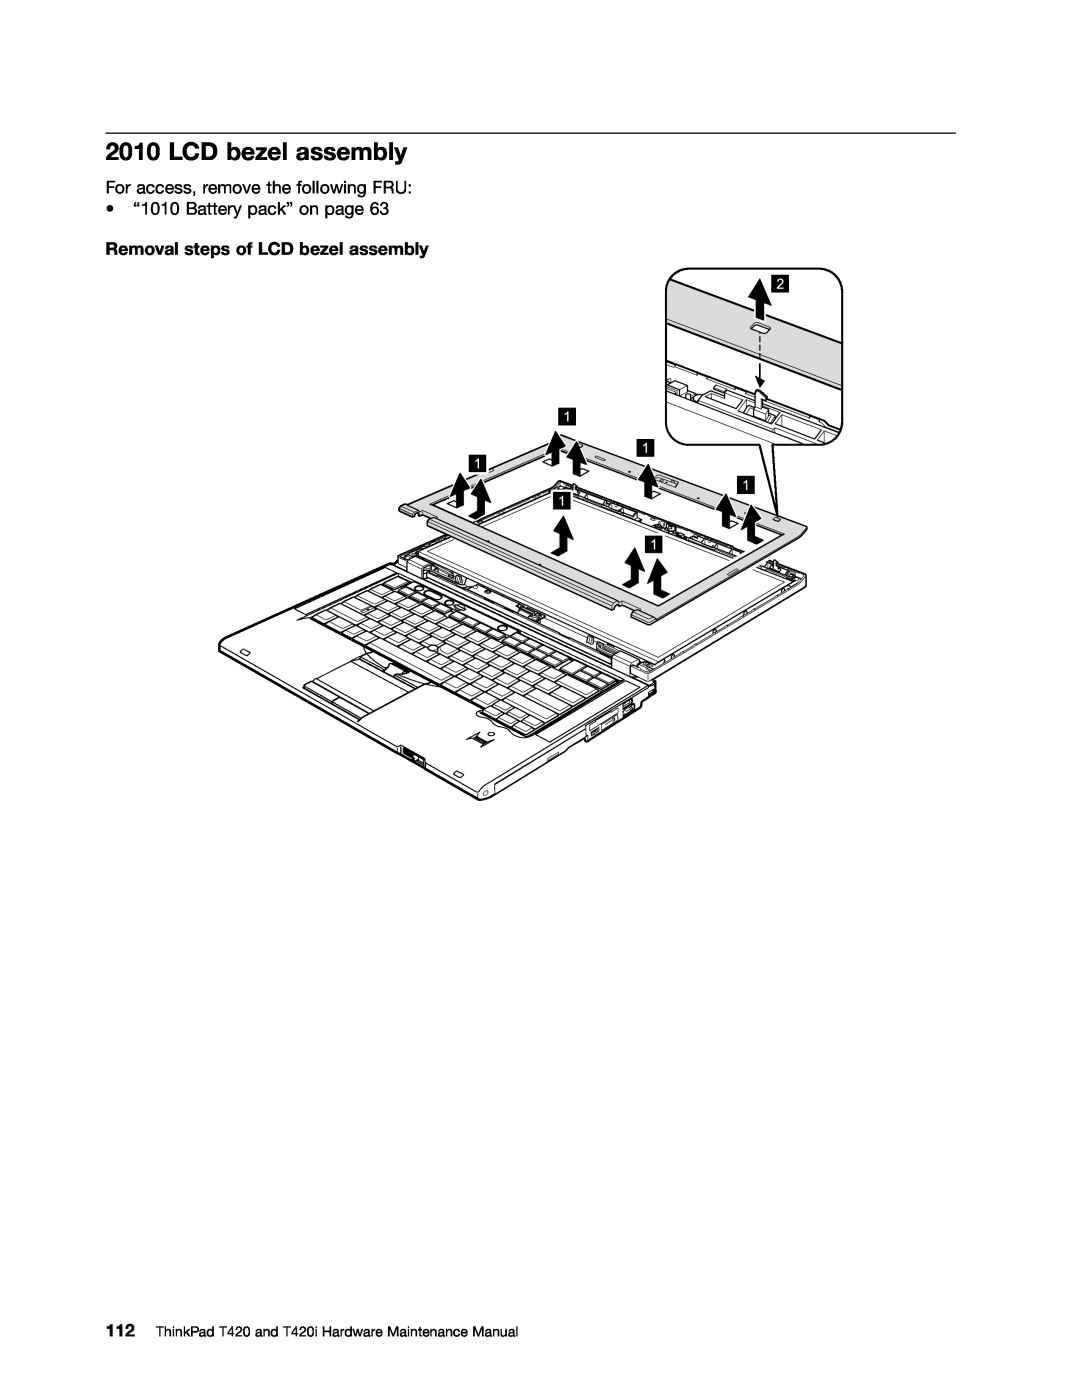 Lenovo T420i manual Removal steps of LCD bezel assembly 